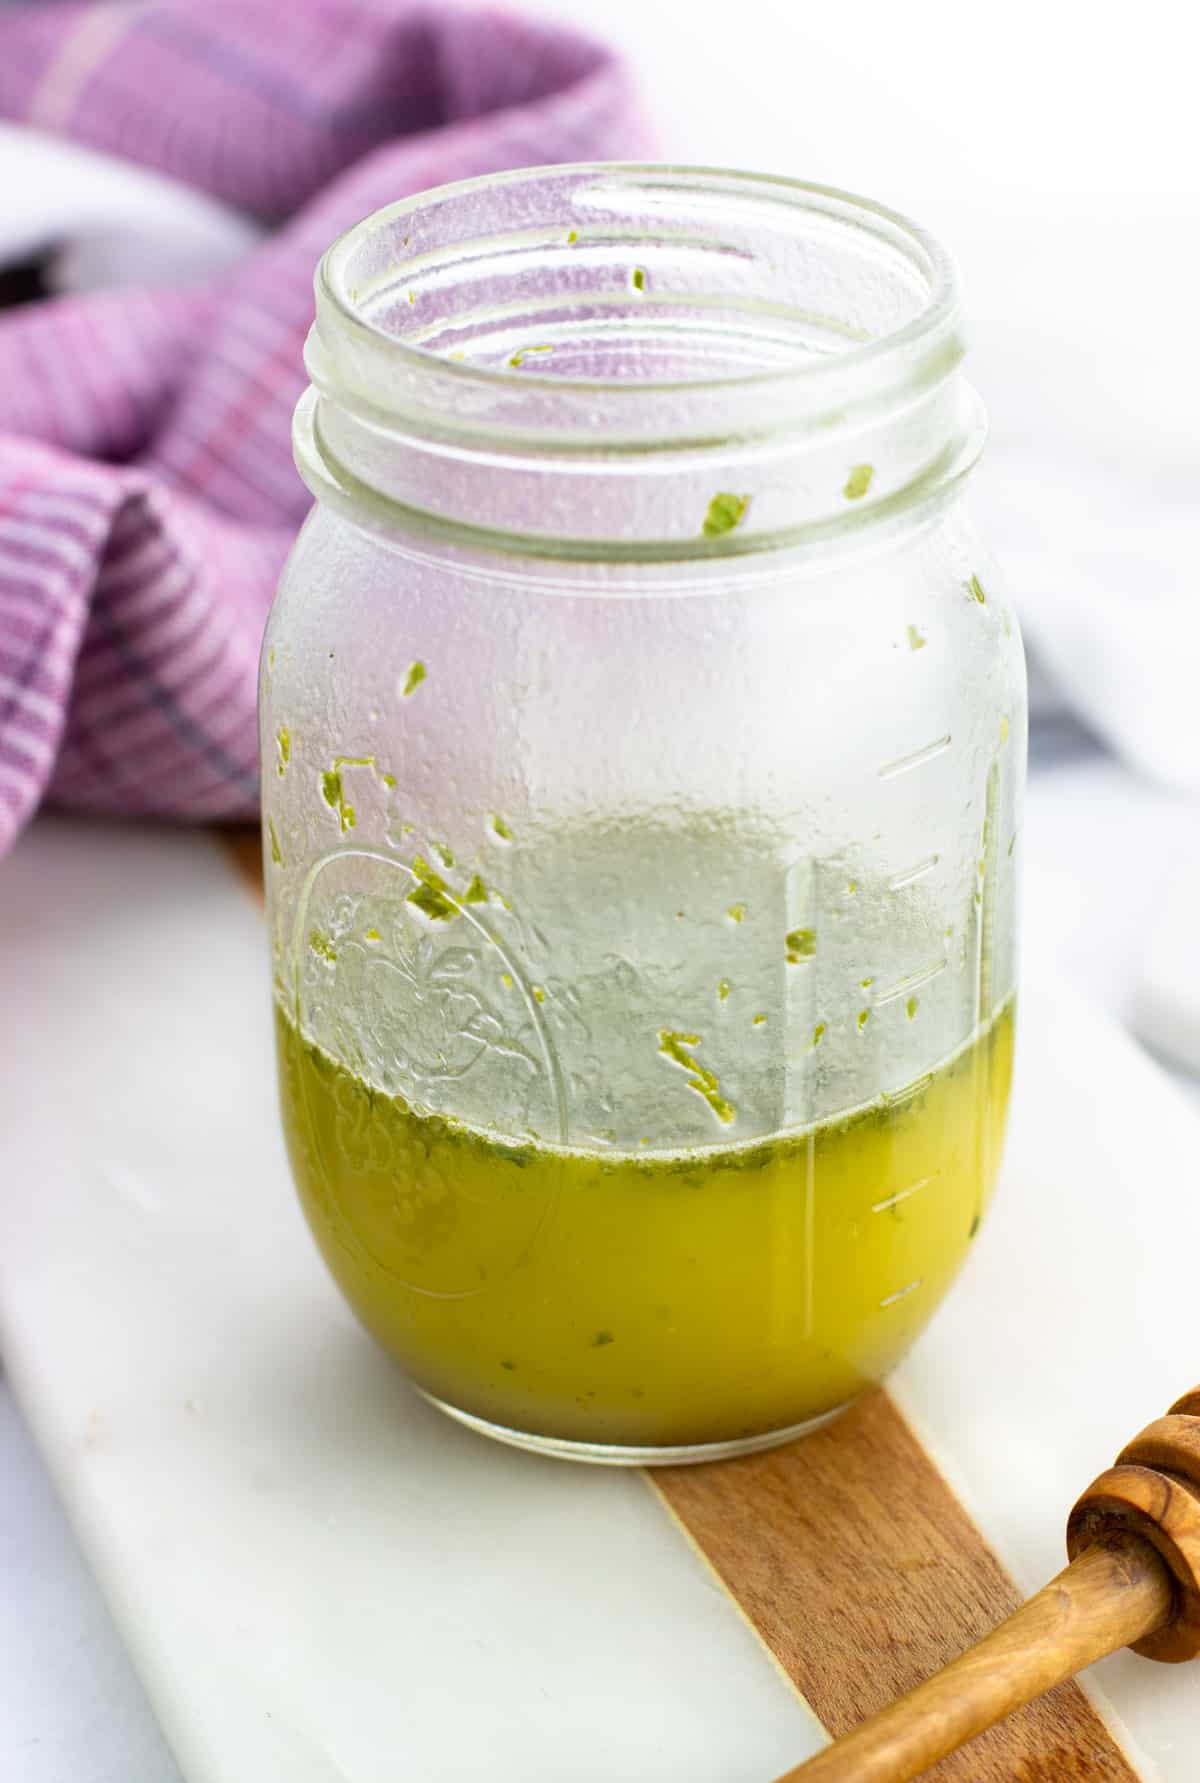 Honey mint vinaigrette combined in a glass jar.